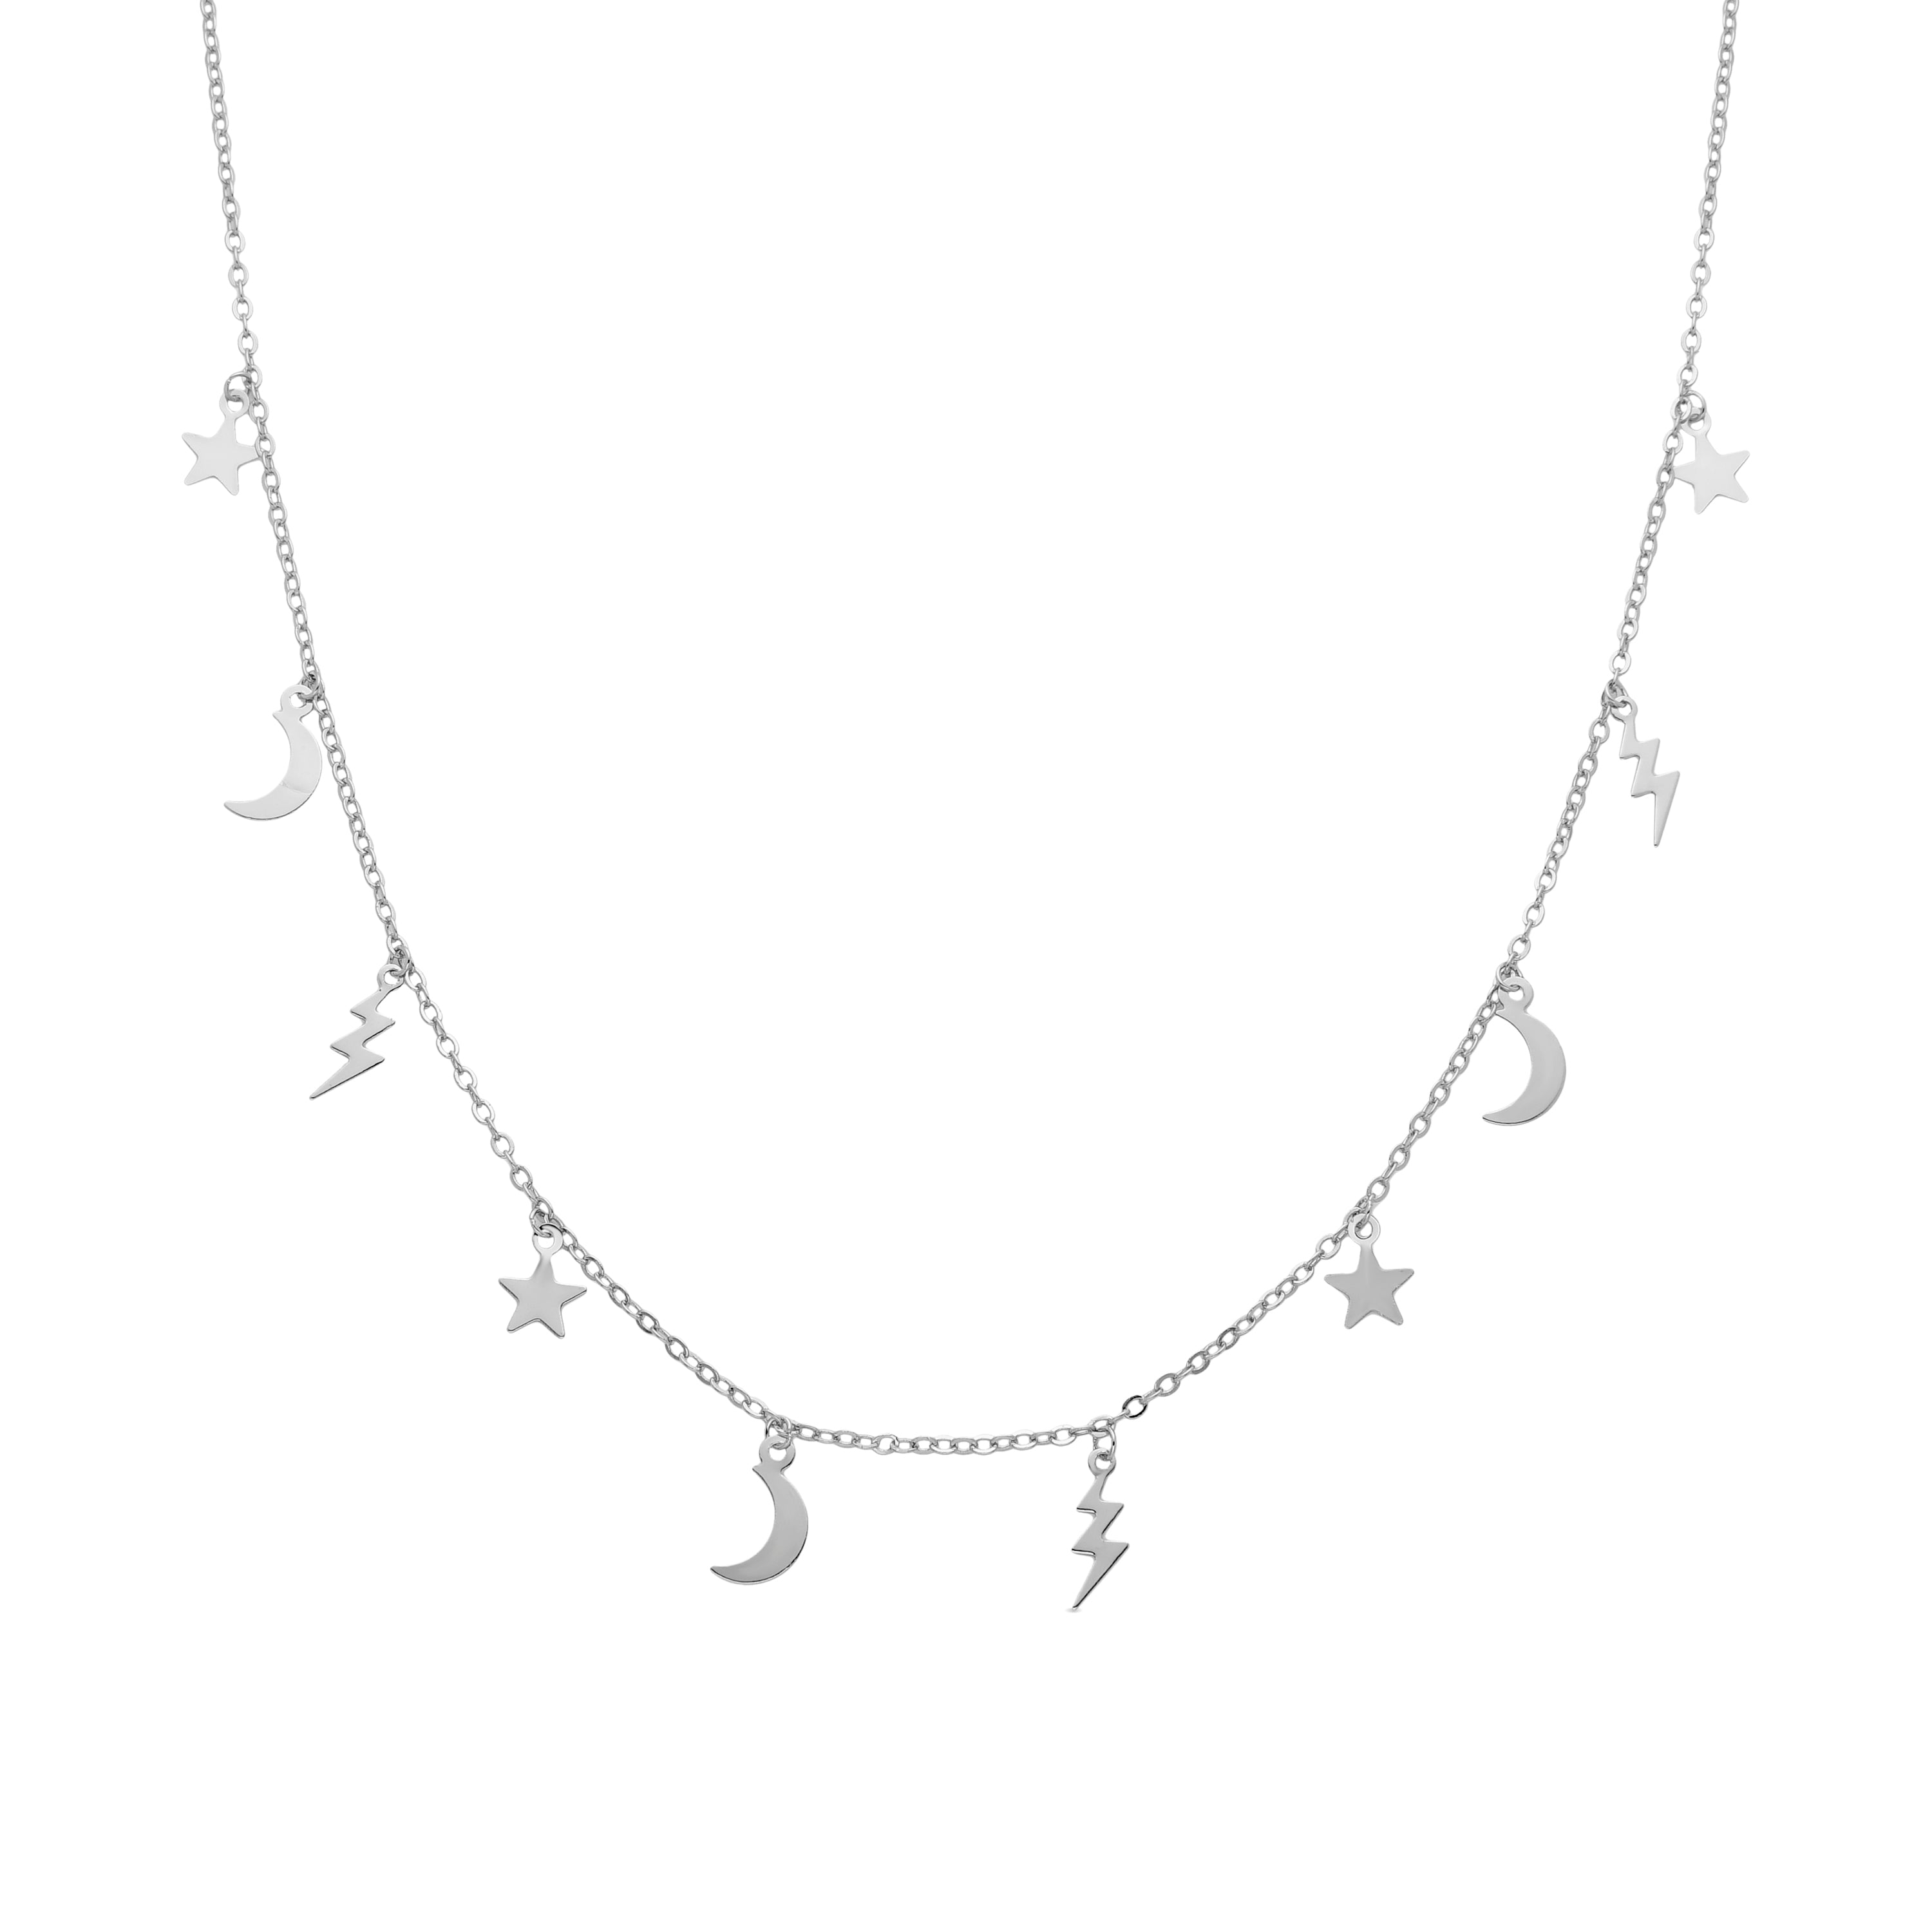 Diaxi silver finish necklace